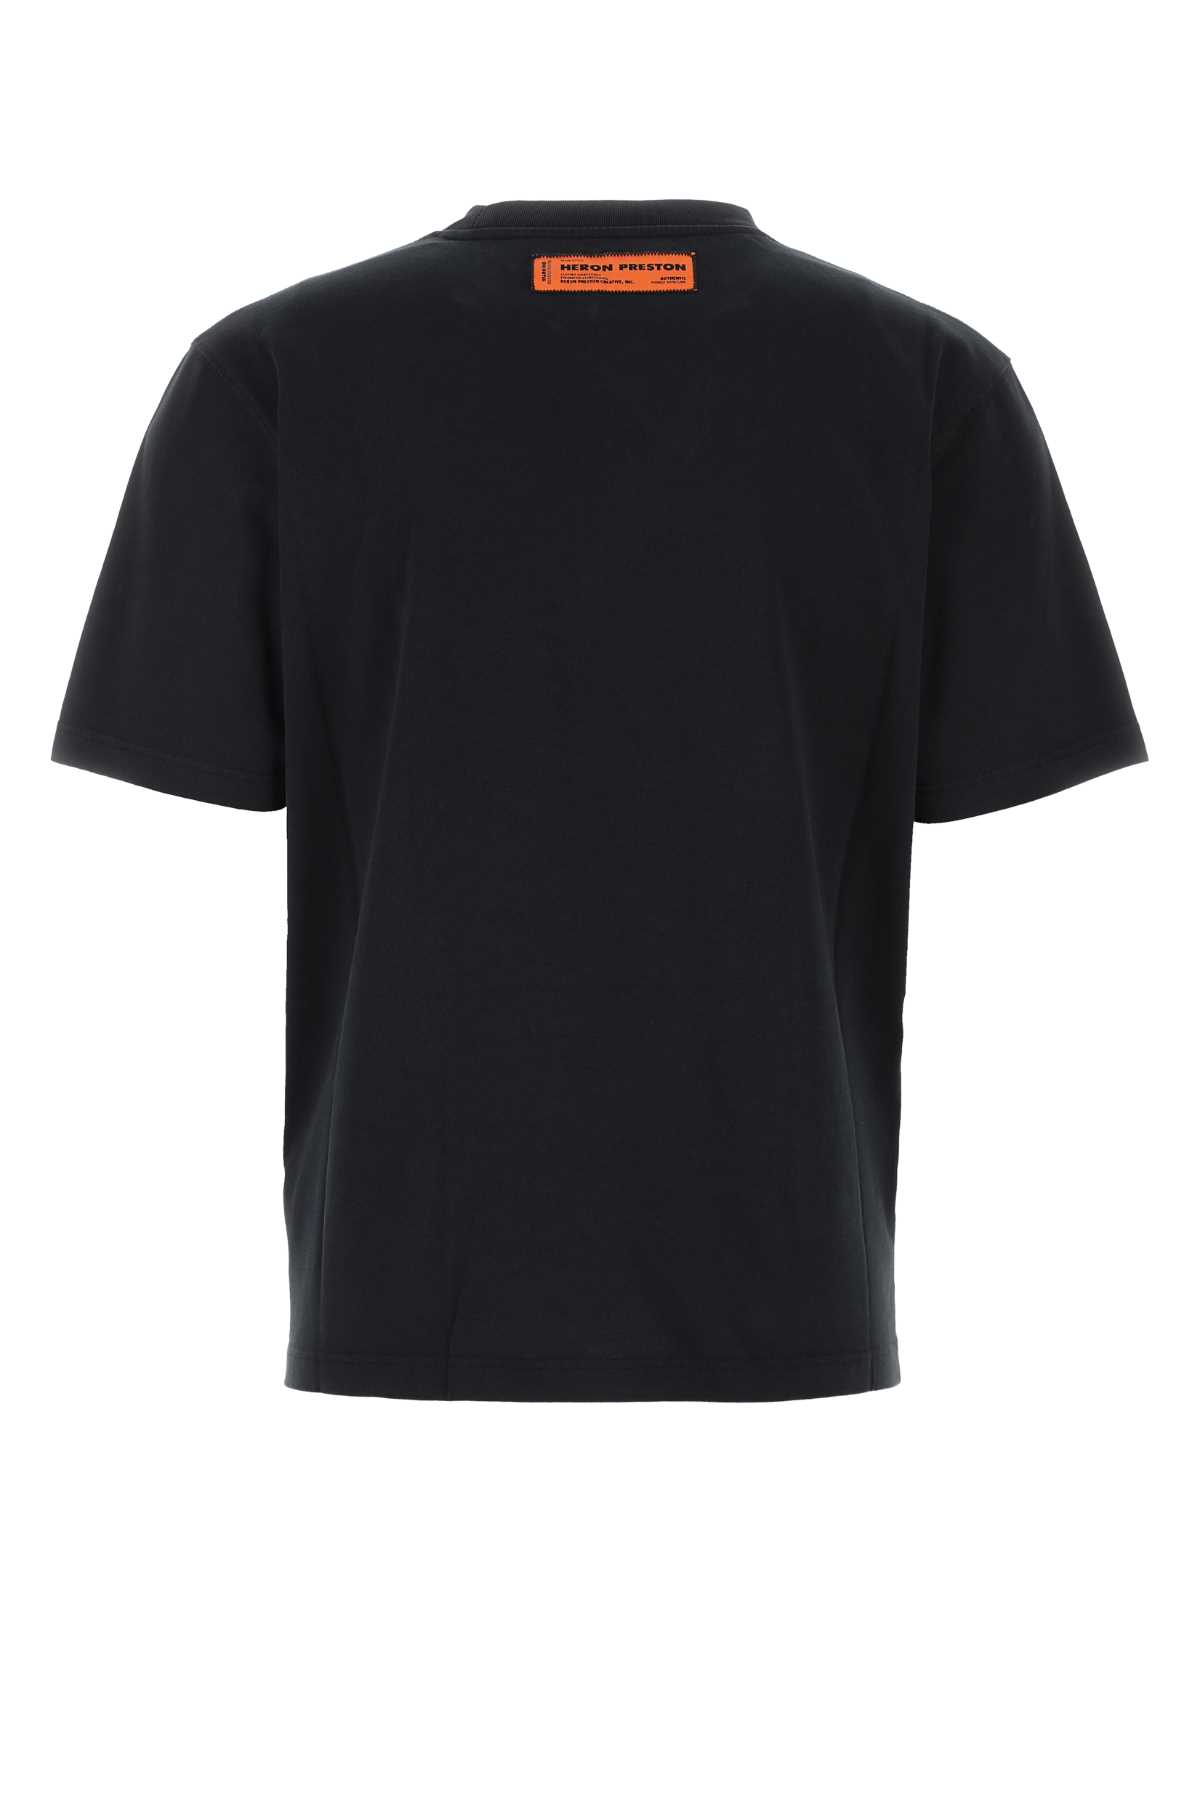 Heron Preston Black Cotton Oversize T-shirt In Blackwhite